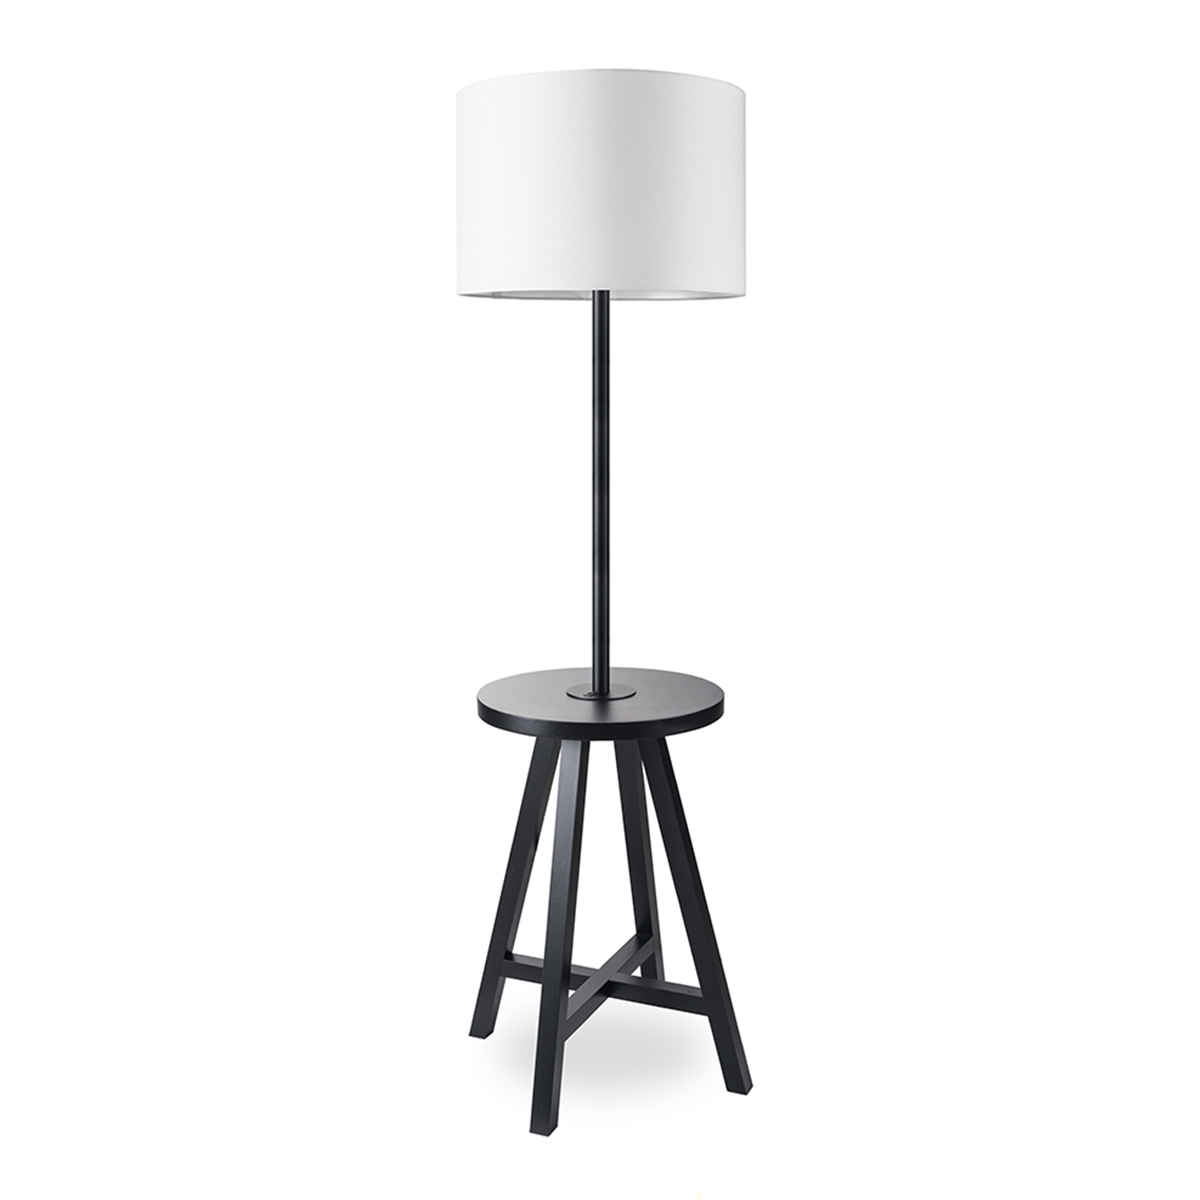 Tangla lighting - TLF7030-01SB - LED floor lamp 1 Light - wood and TC fabric in black and white - E27